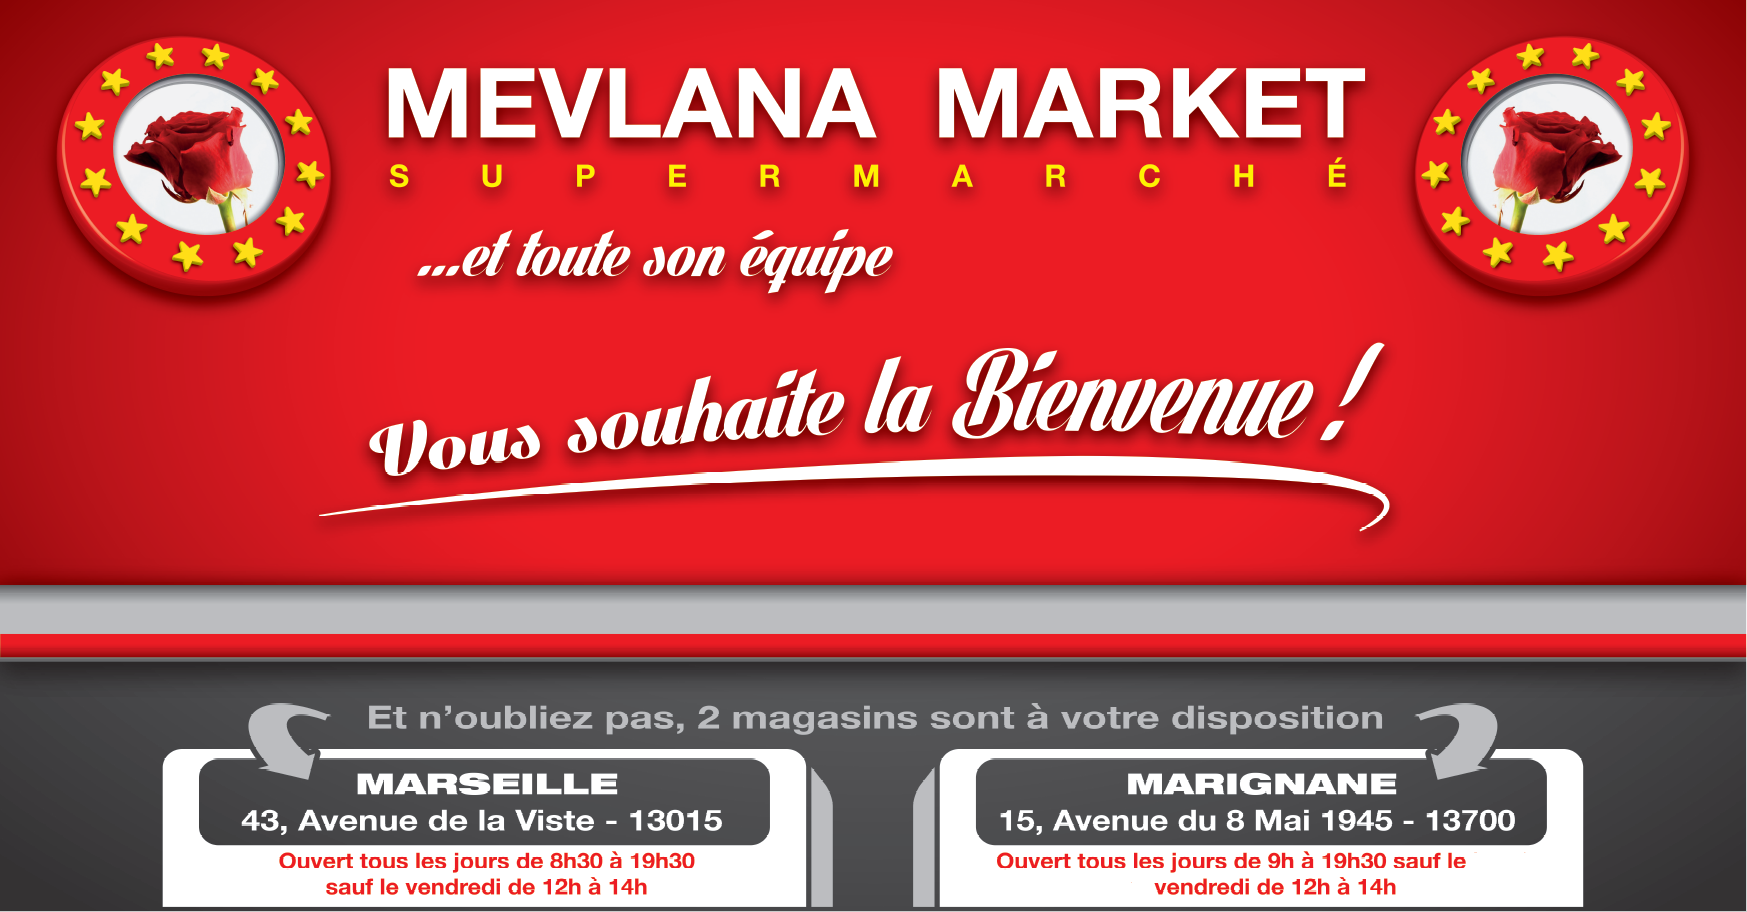 Mevlana Market Marignane